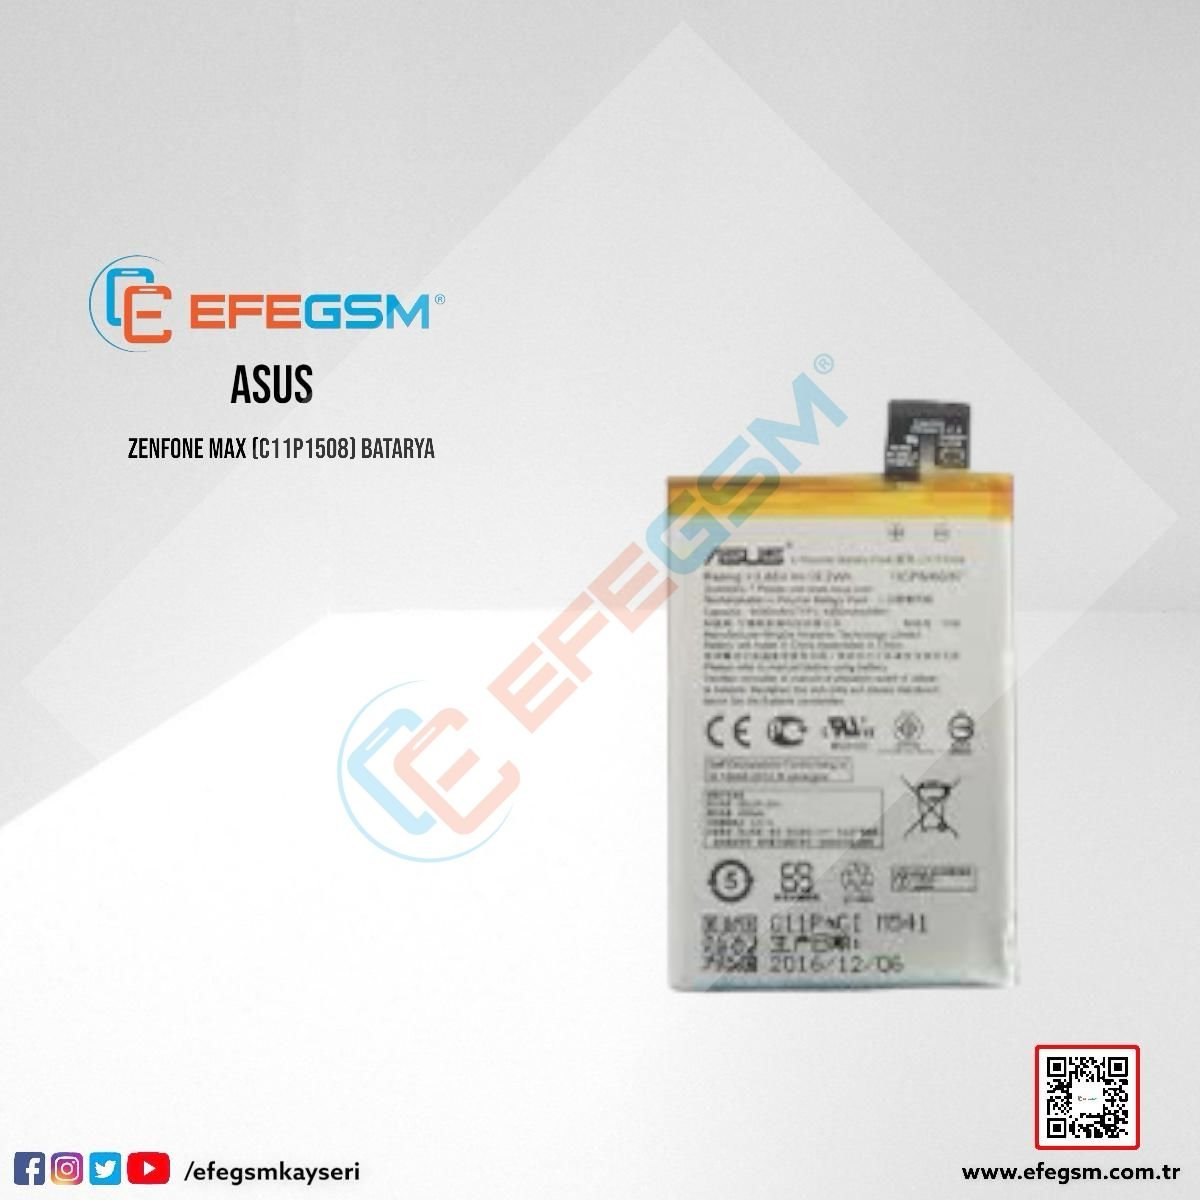 Asus Zenfone Max (C11P1508) Batarya